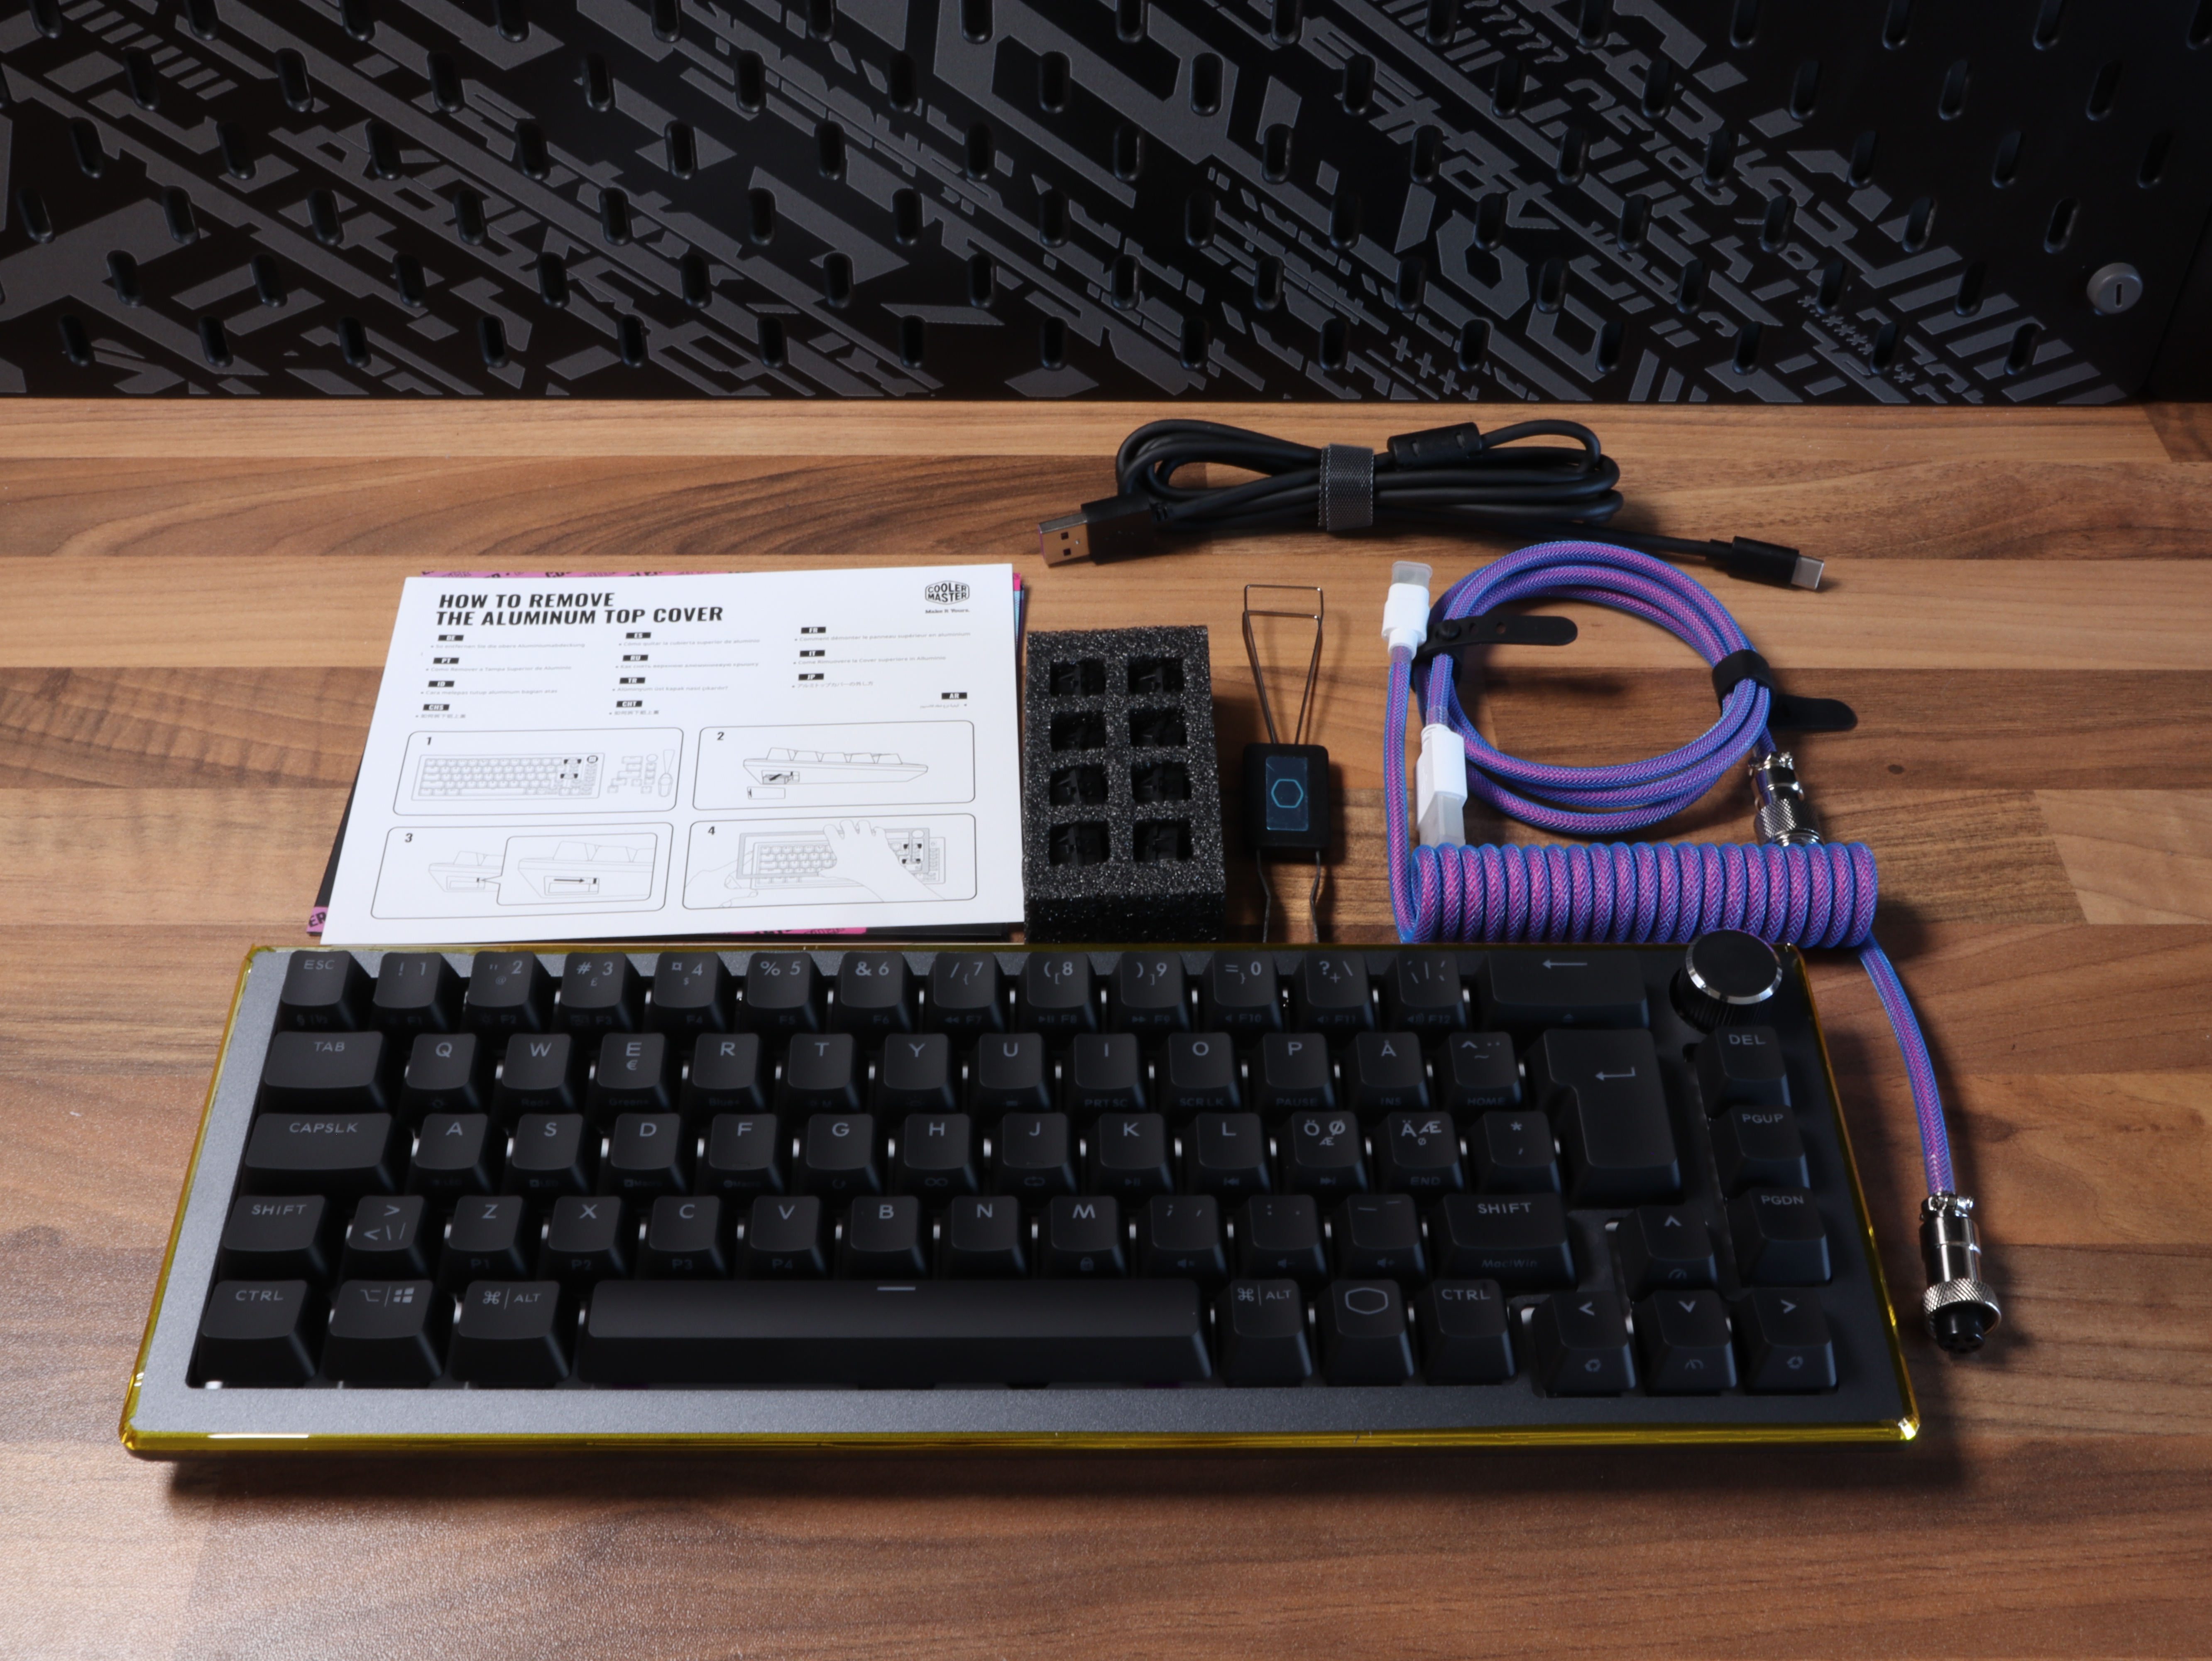 V2 CK720 TKL 65% cable Master tastatur gaming keyboard multimedia wired Cooler kailh RGB.JPG